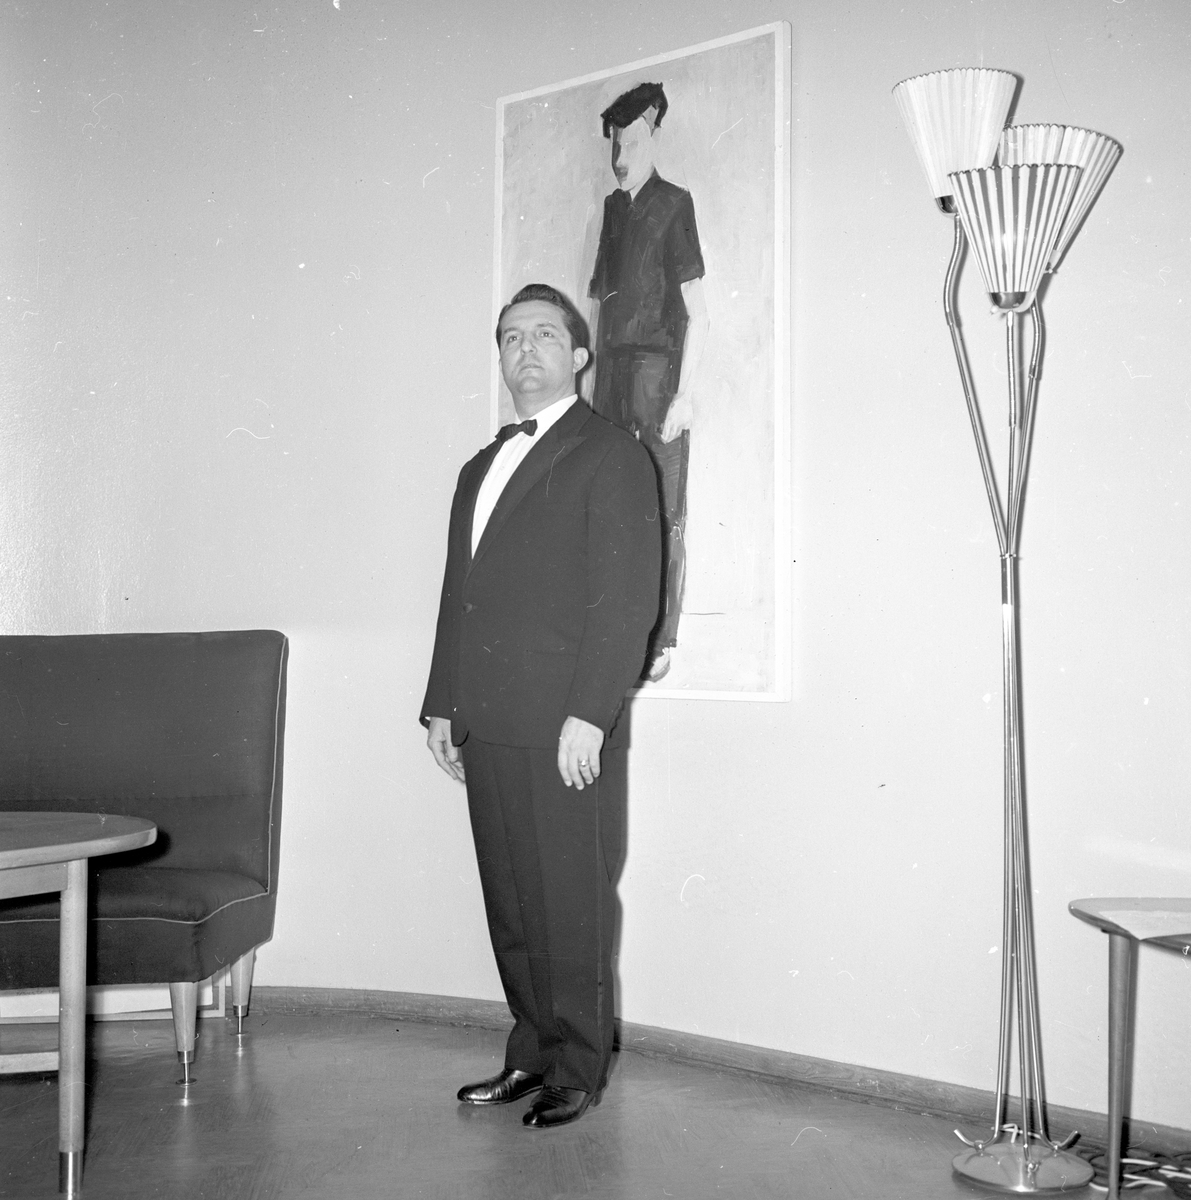 Stående mann, operasangere. Italiensk opera i Oslo. Fotografert 1958.